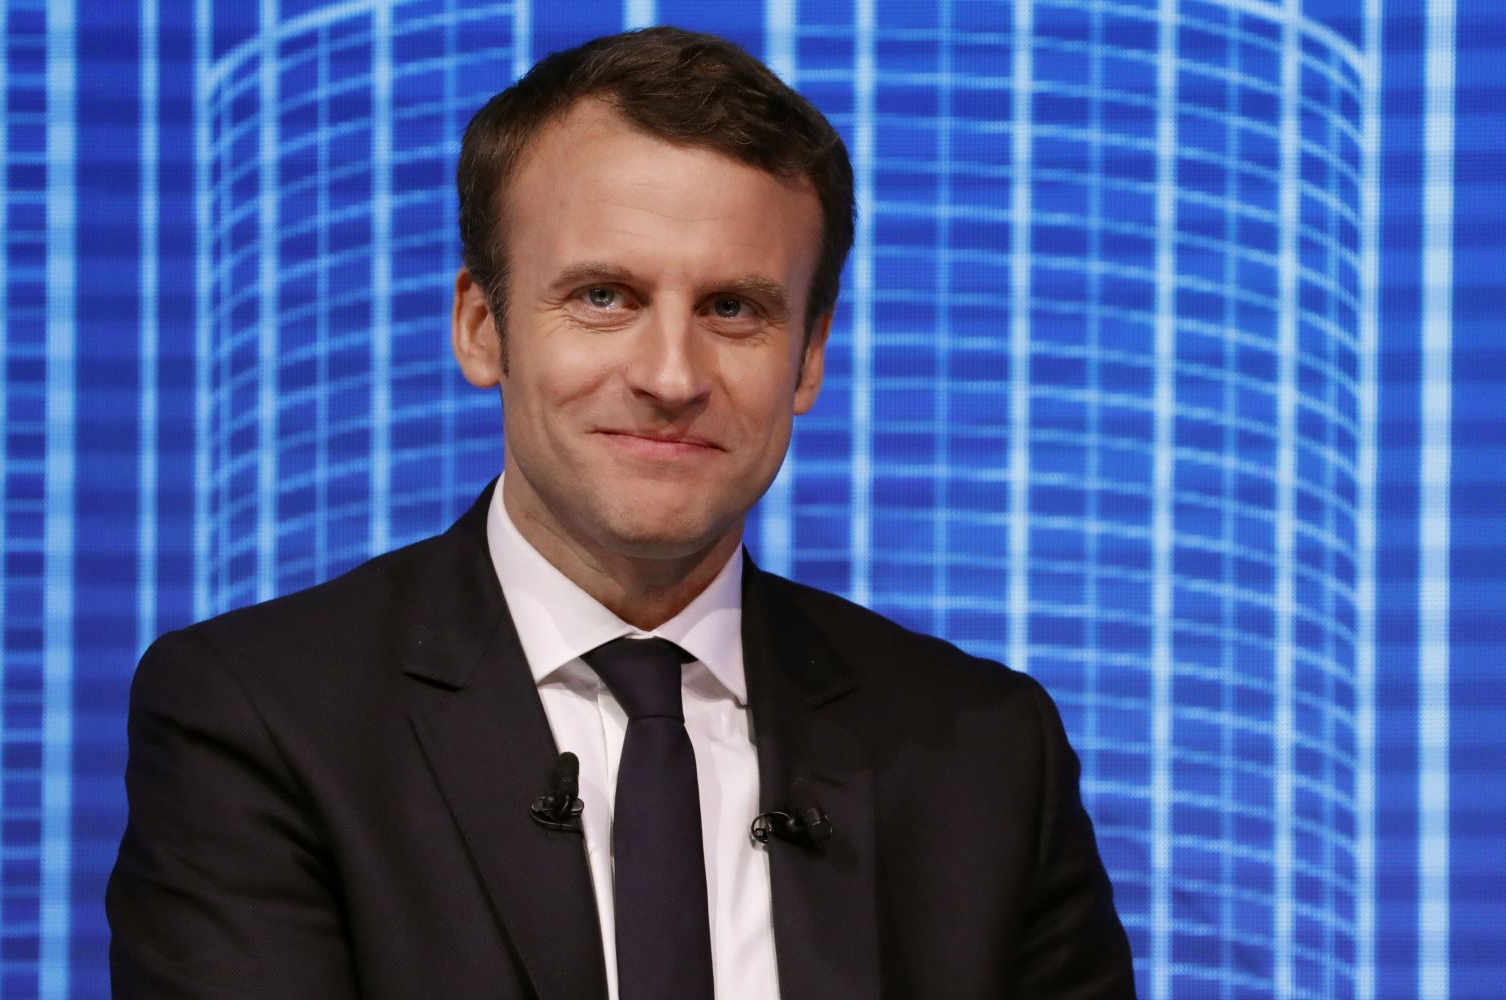 Hope for Europe: Macron reveals campaign platform